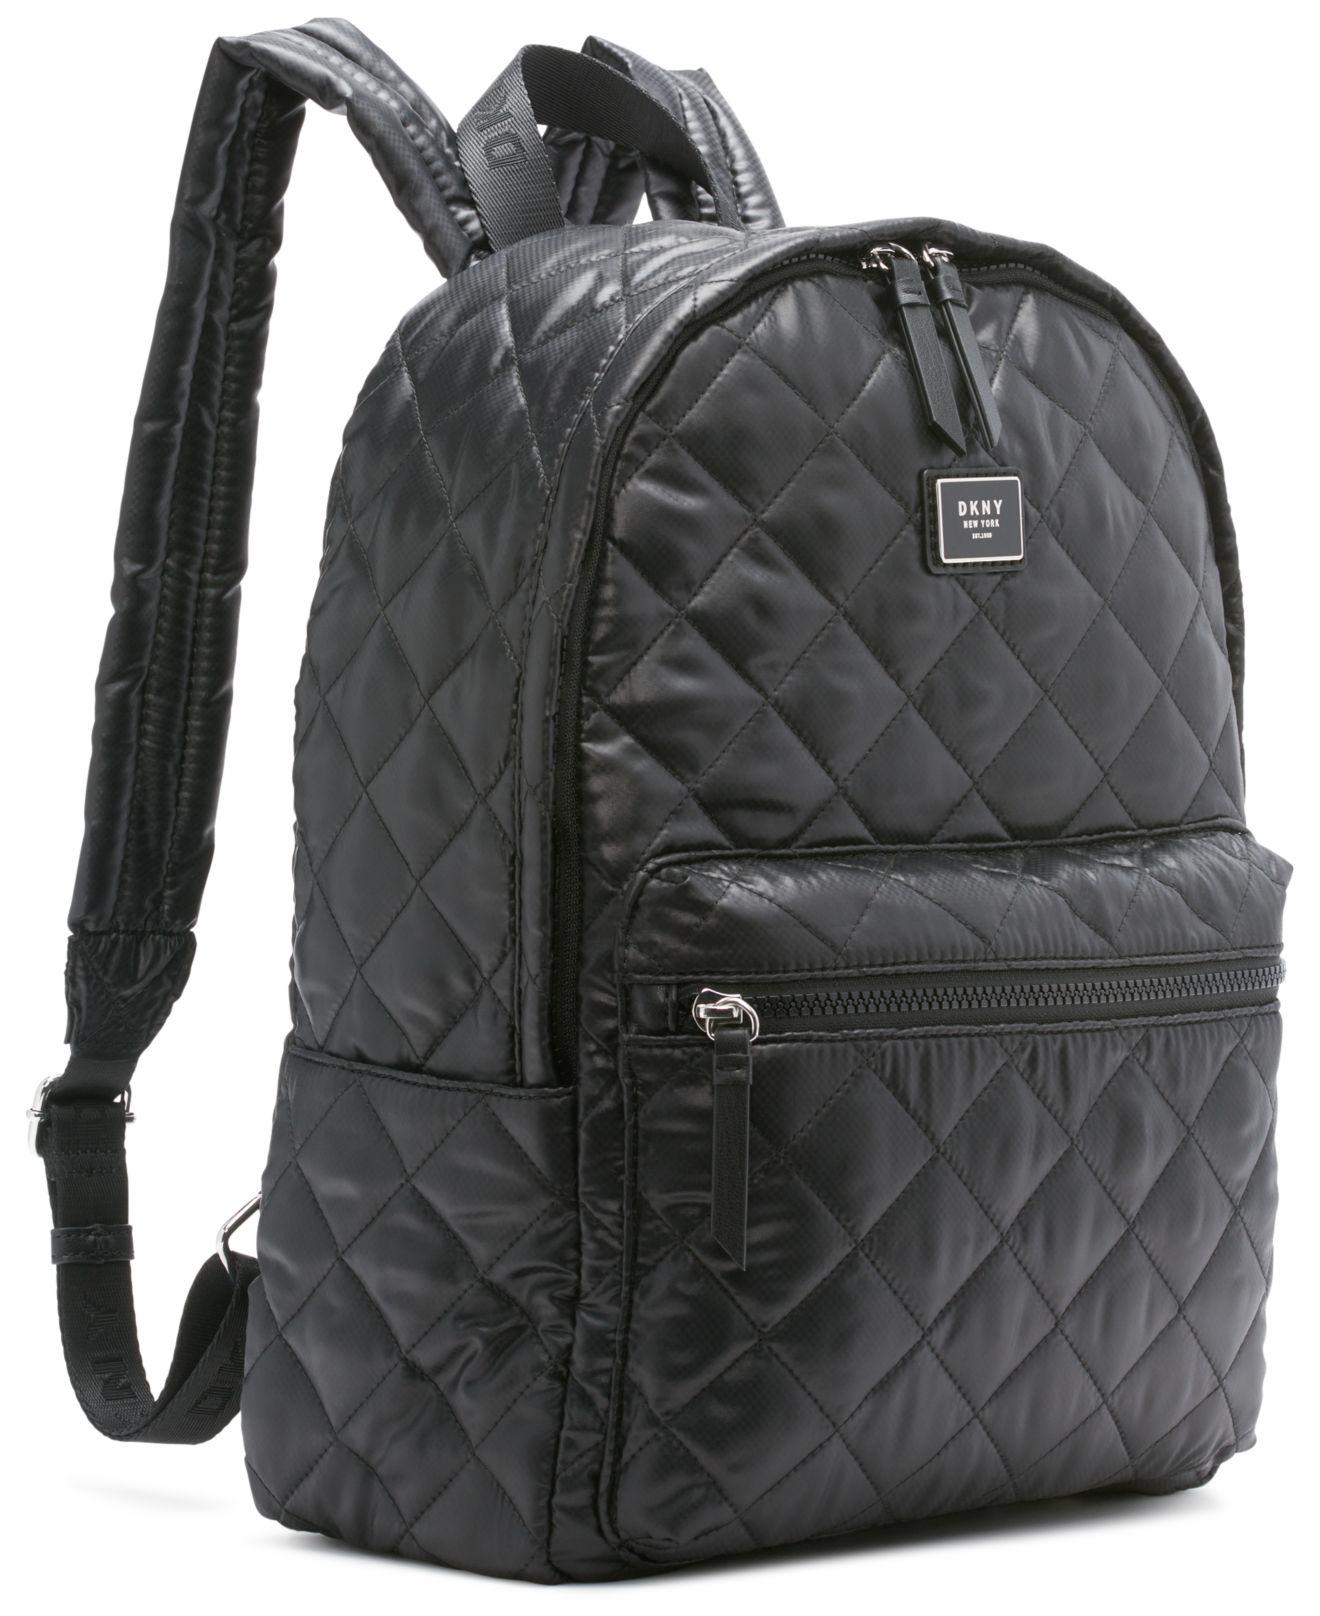 DKNY Synthetic Maya Backpack in Black/Black (Black) - Lyst